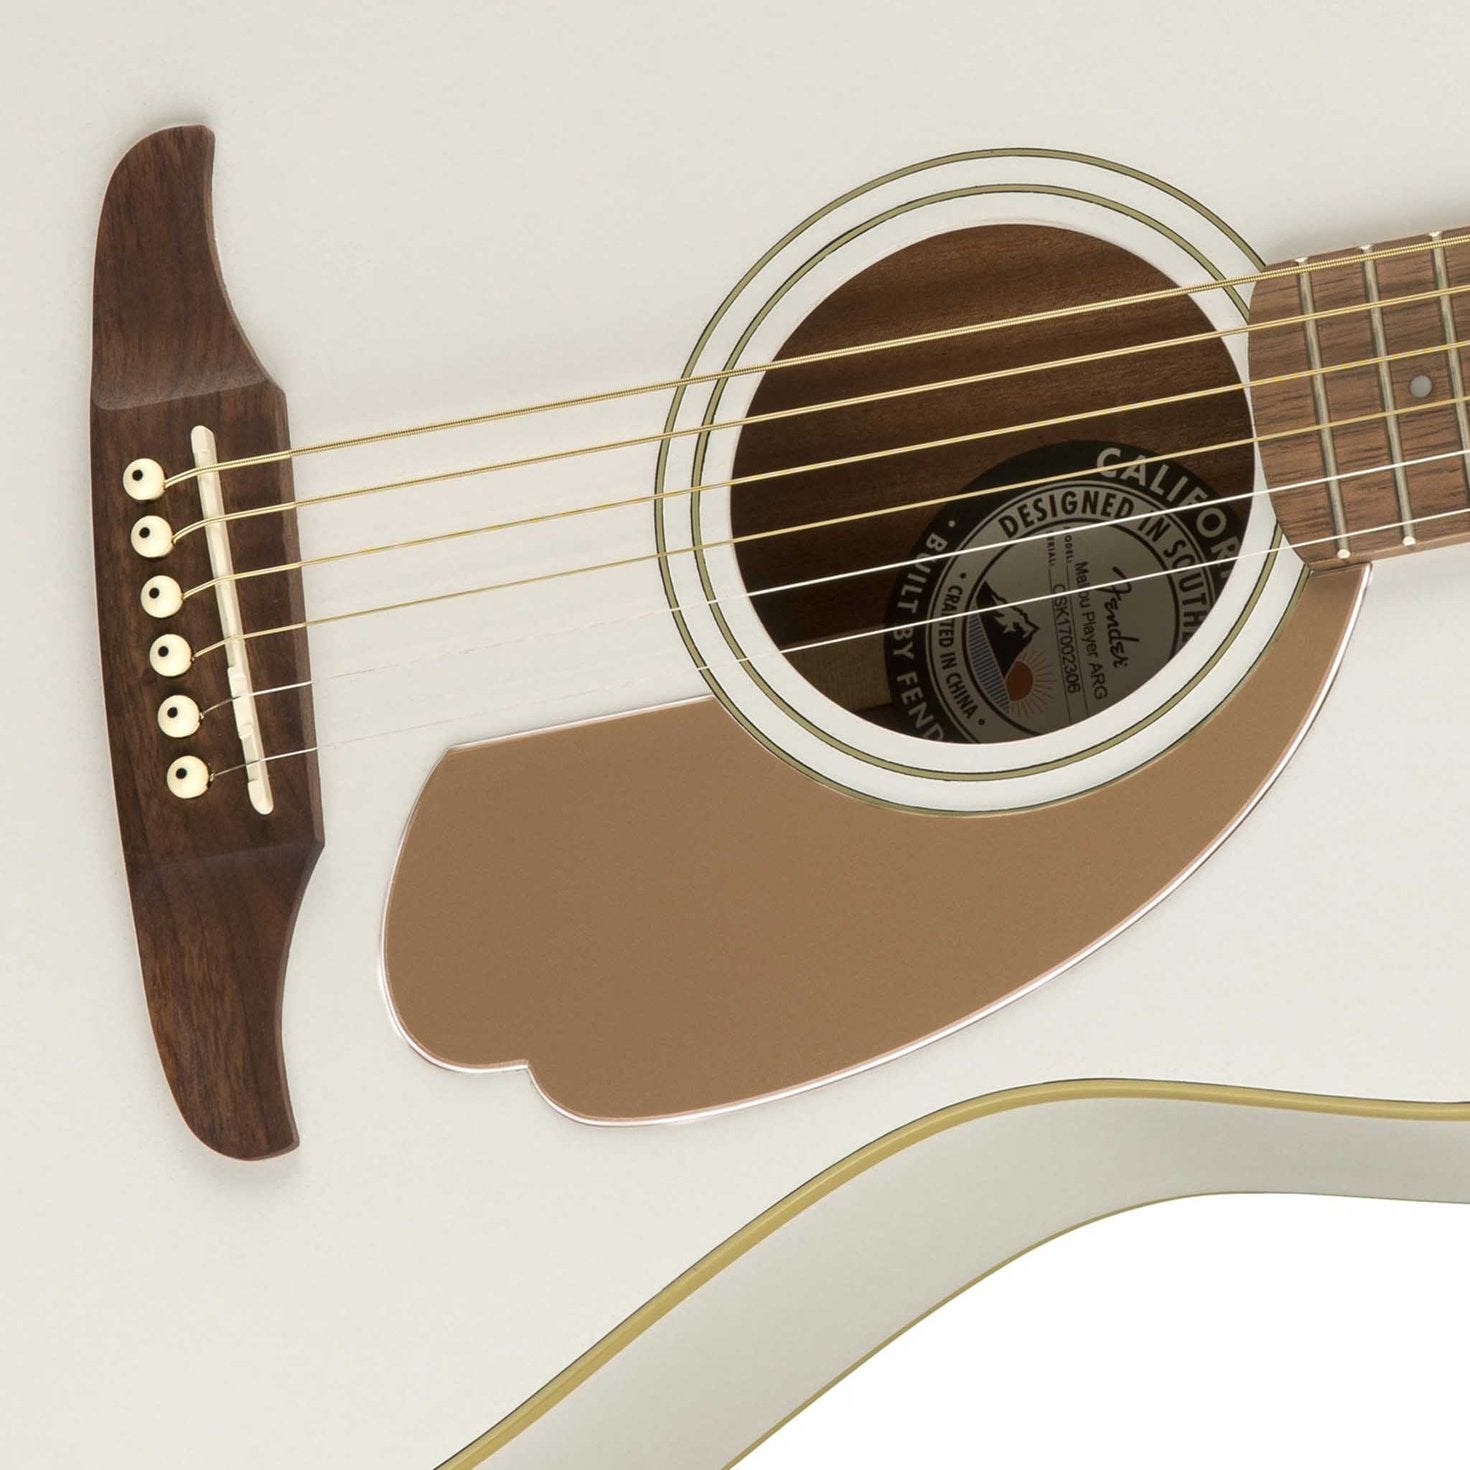 Fender Malibu Player Small-Bodied Acoustic Guitar, Arctic Gold, FENDER, ACOUSTIC GUITAR, fender-acoustic-guitar-f03-097-0722-080, ZOSO MUSIC SDN BHD